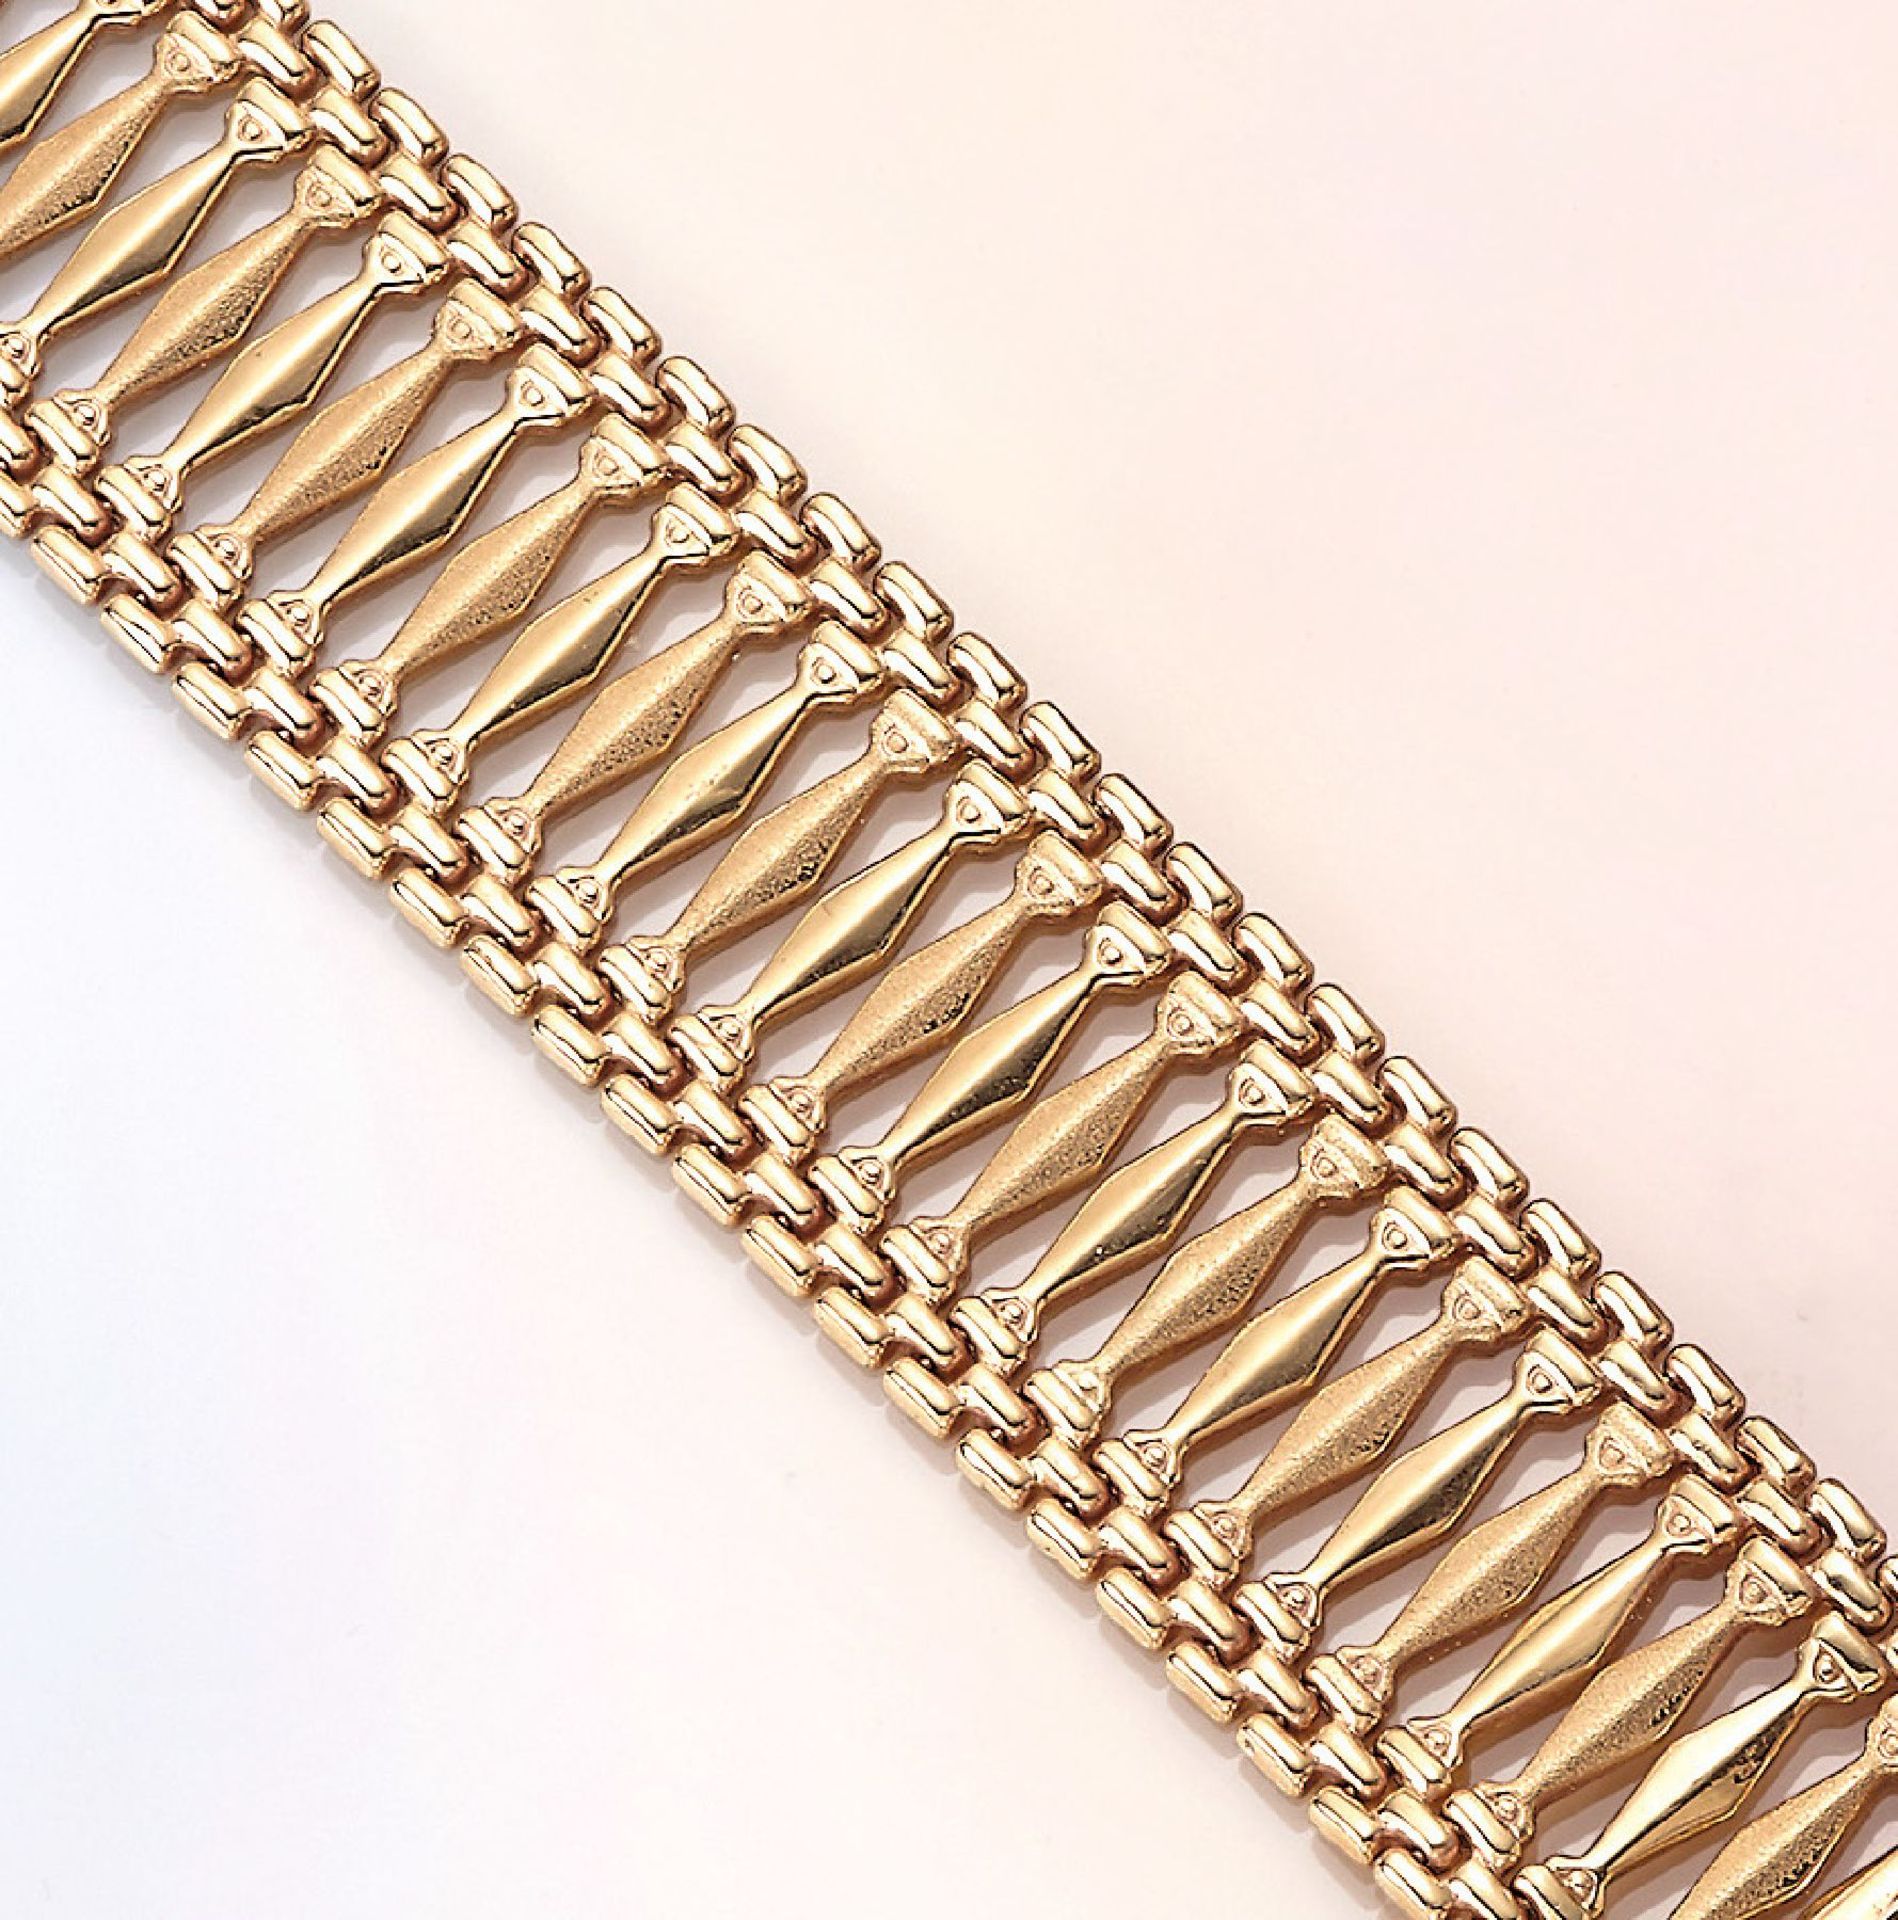 14 kt Gold Armband, GG 585/000, ca. 36.3 g,L. ca. 18.5 cm, Kastenschloss mit Sicherheitsachten14